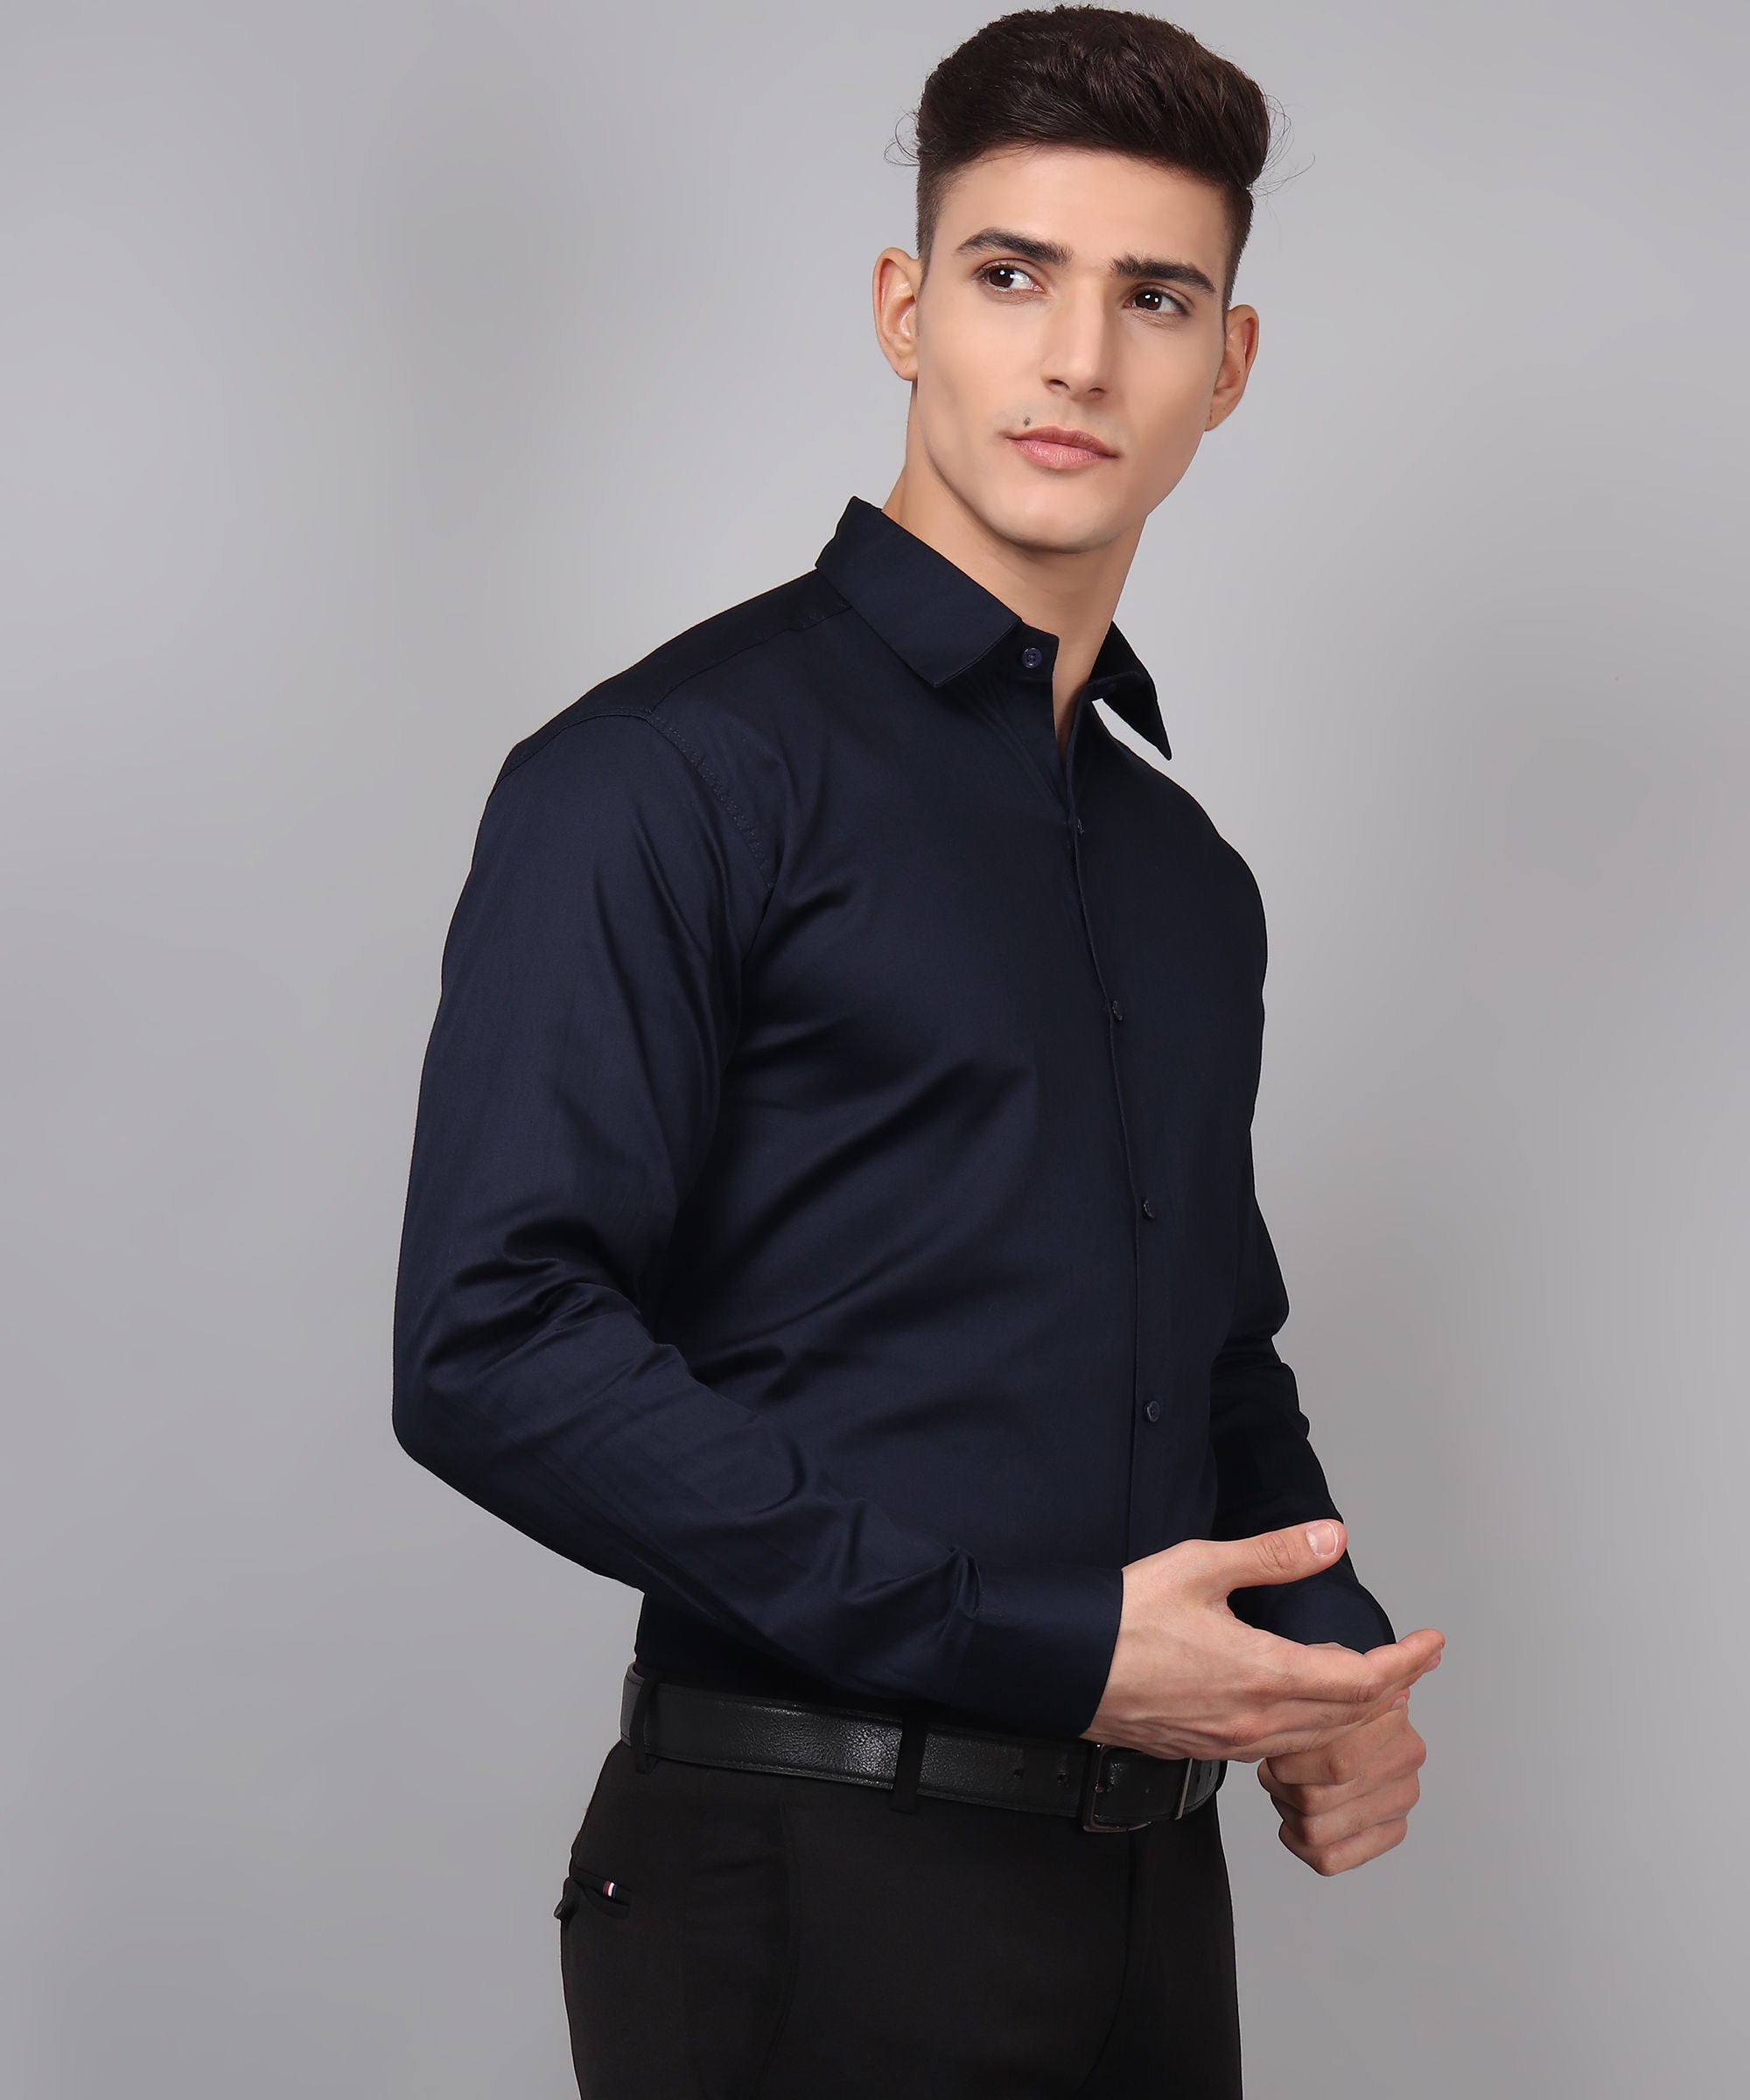 a man wearing a black shirt and black pants